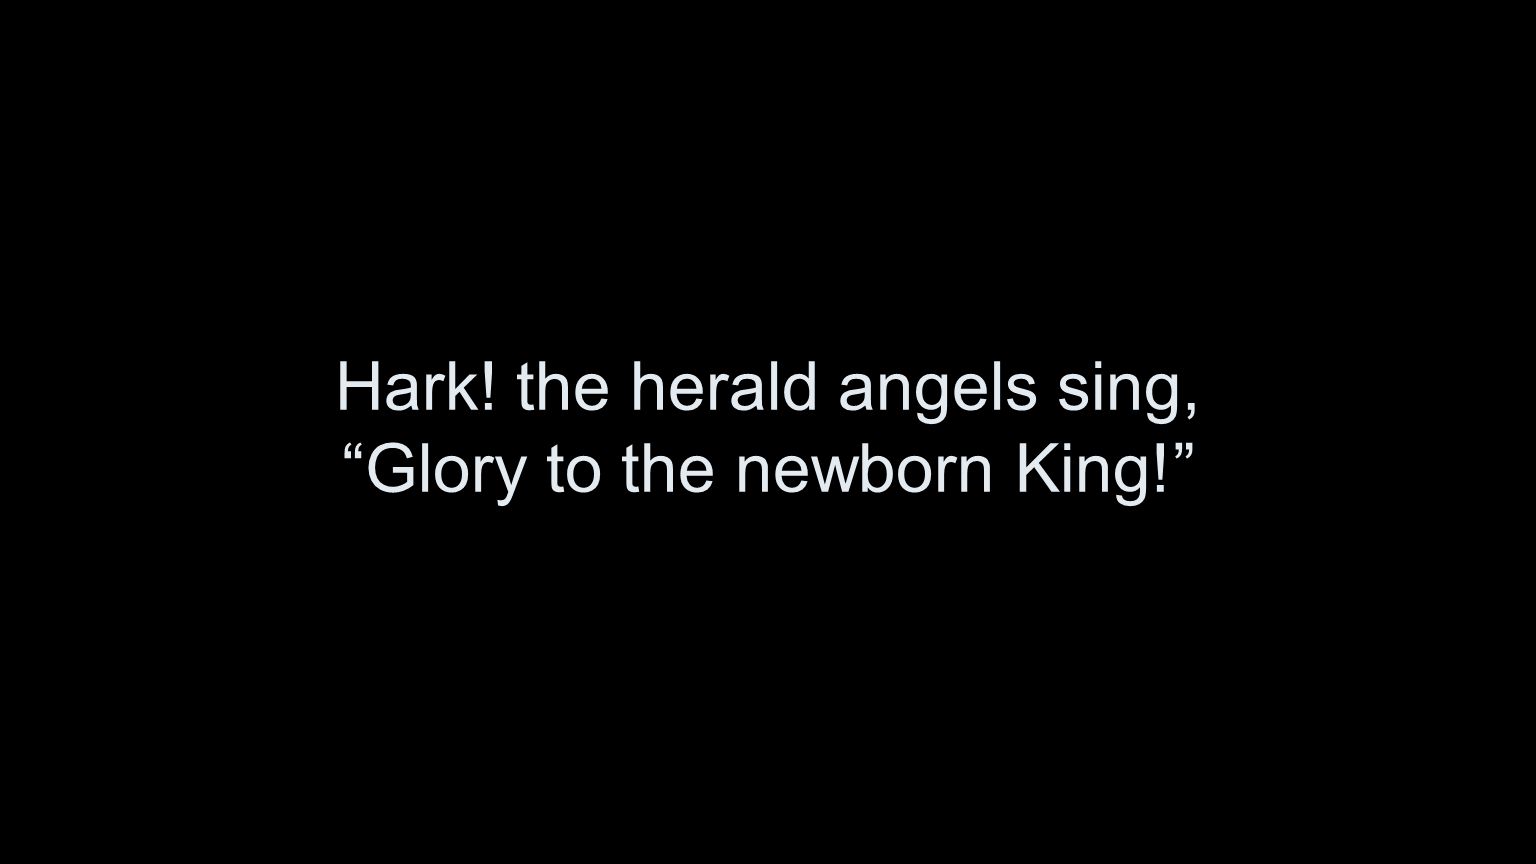 Hark! the herald angels sing, Glory to the newborn King!